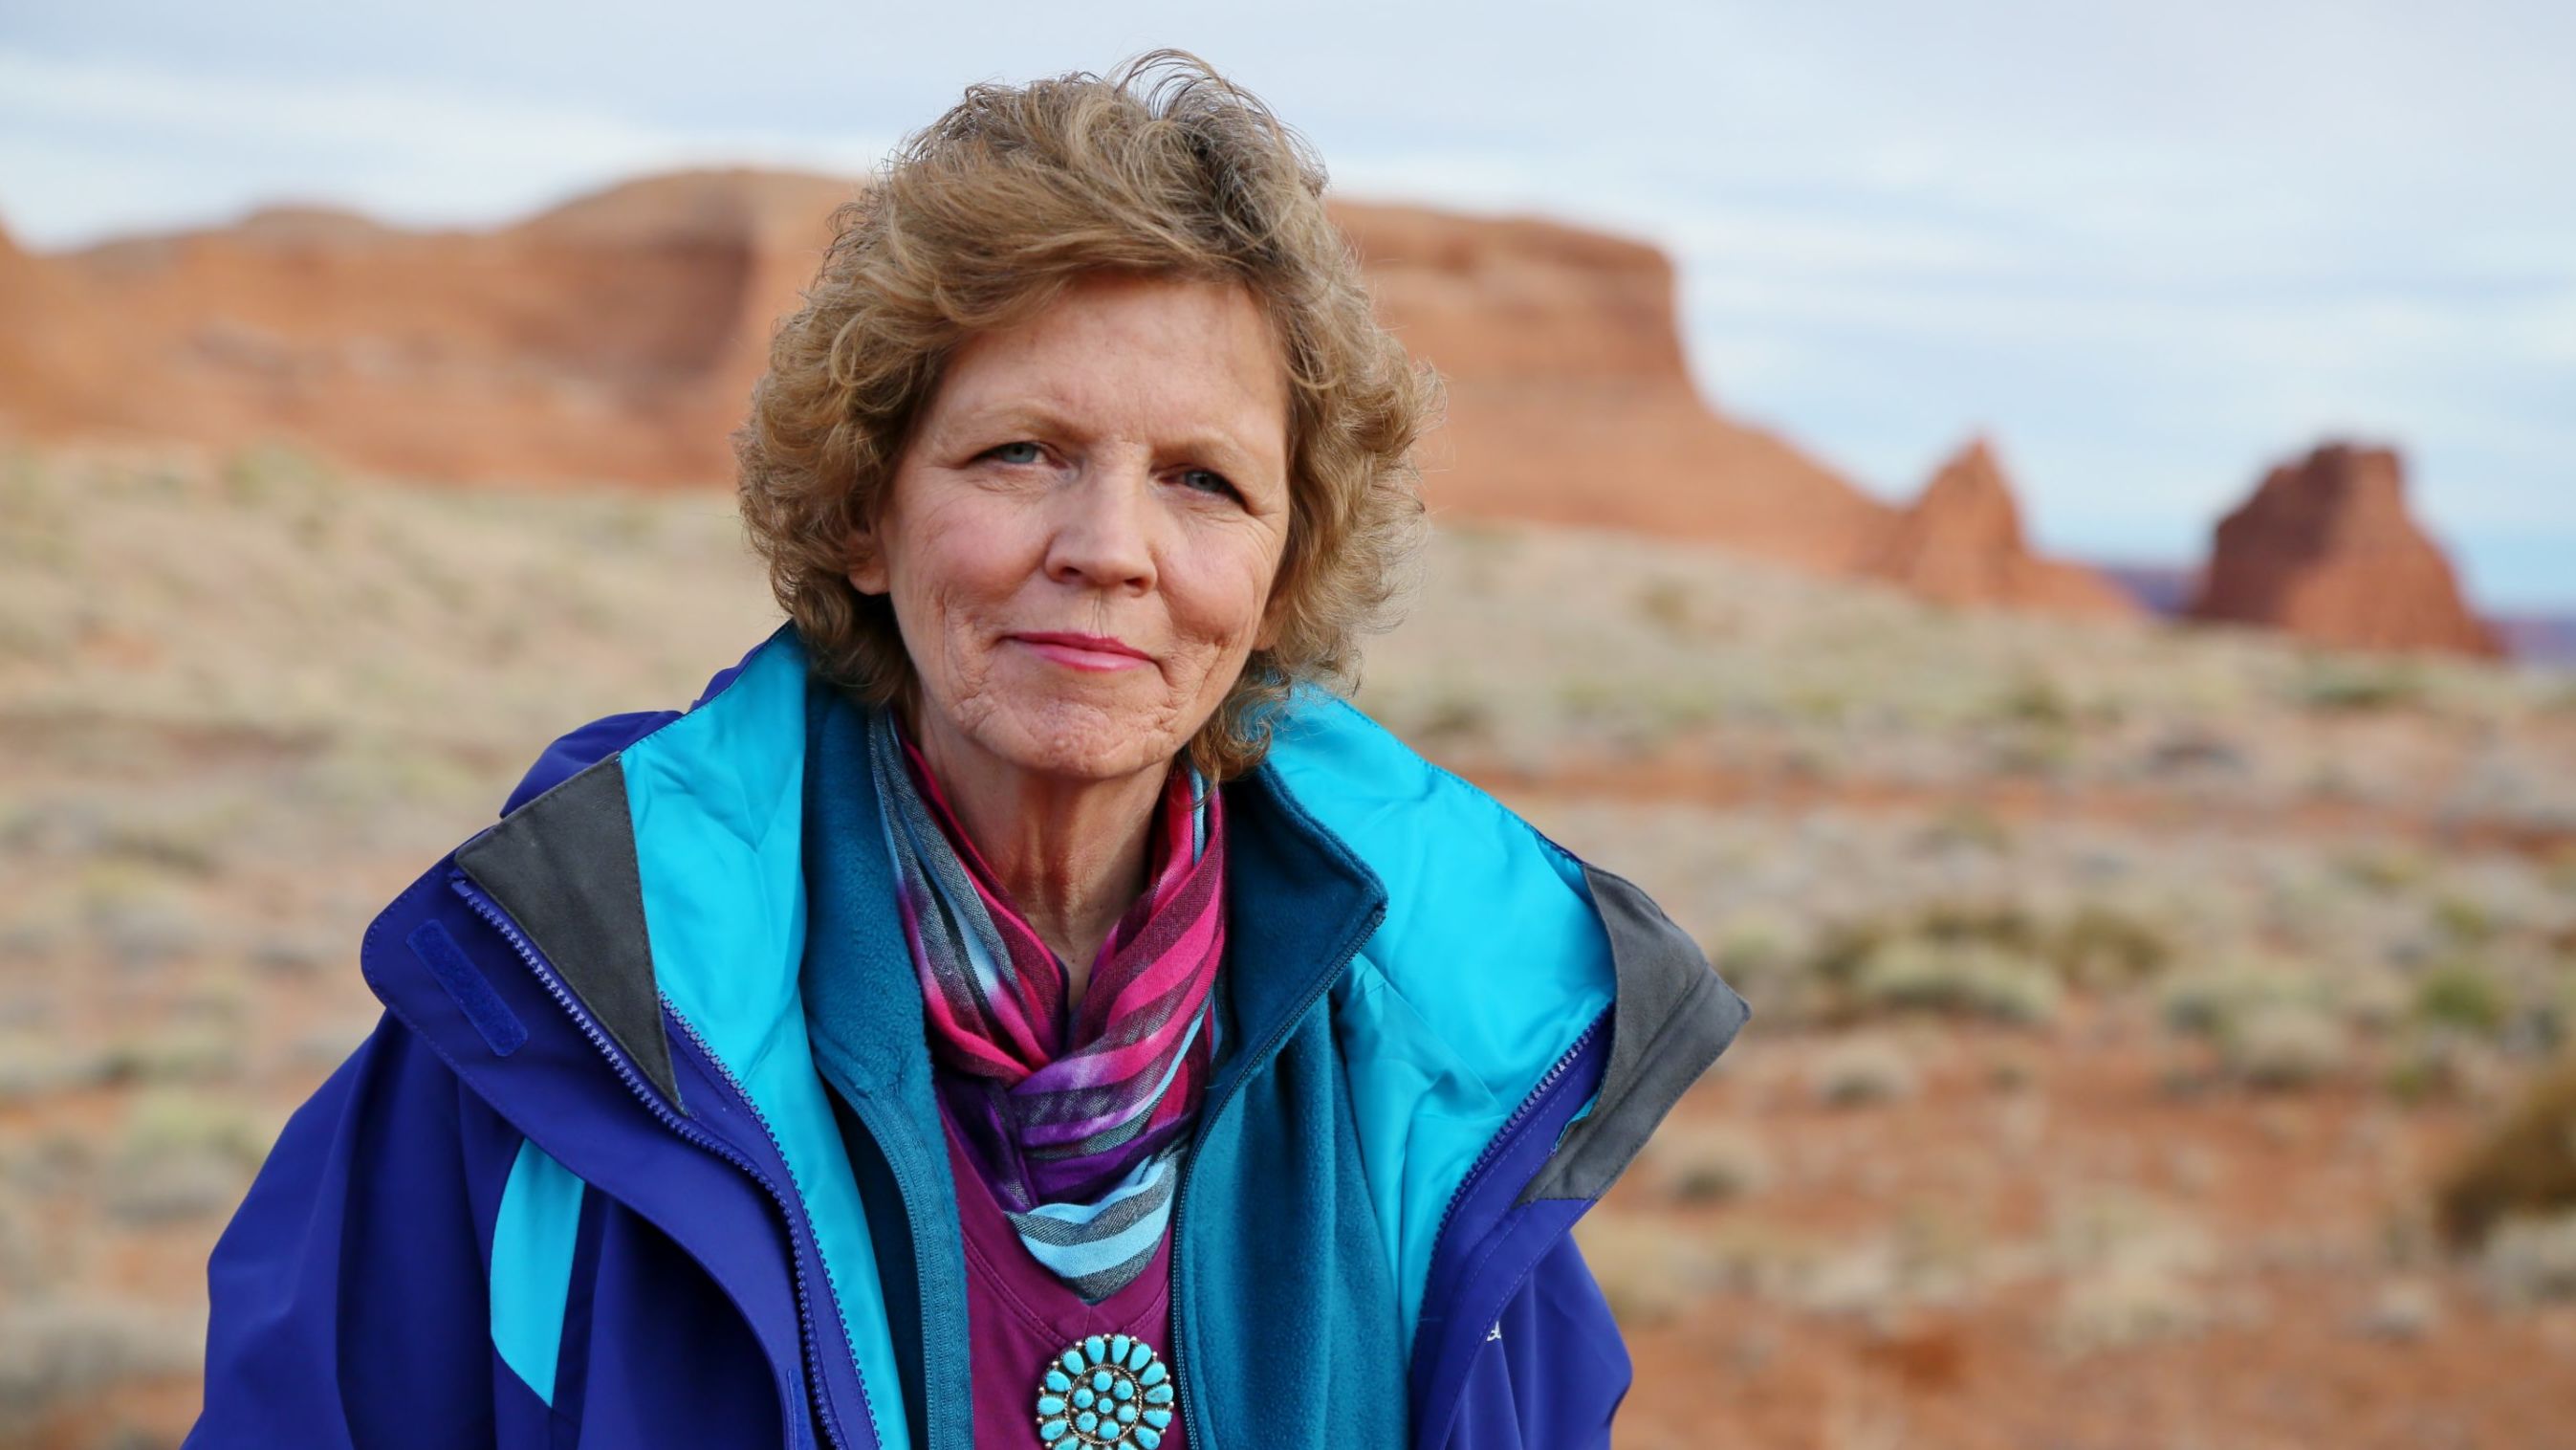 Linda Myers' team has ramped up efforts to bring lifesaving help to Navajo elders during the pandemic.